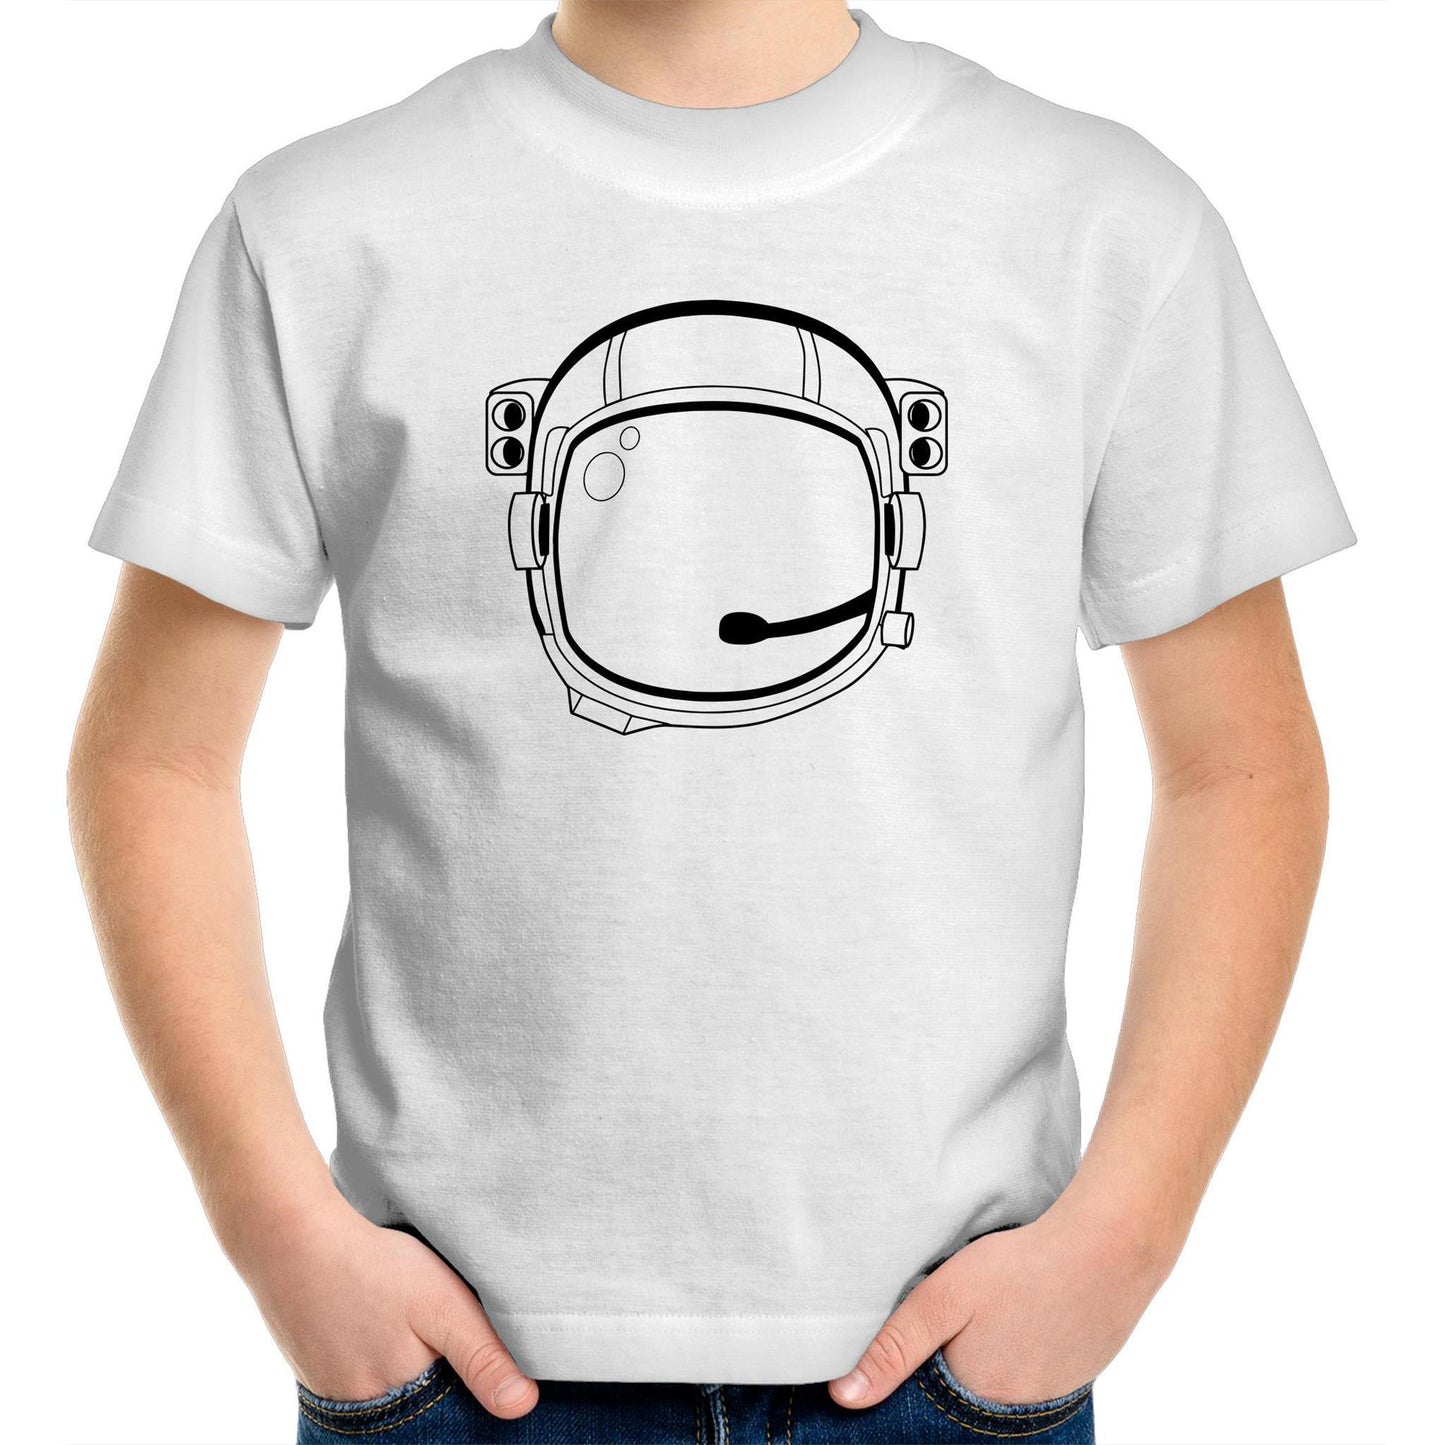 Astronaut Helmet - Kids Youth Crew T-Shirt White Kids Youth T-shirt Space